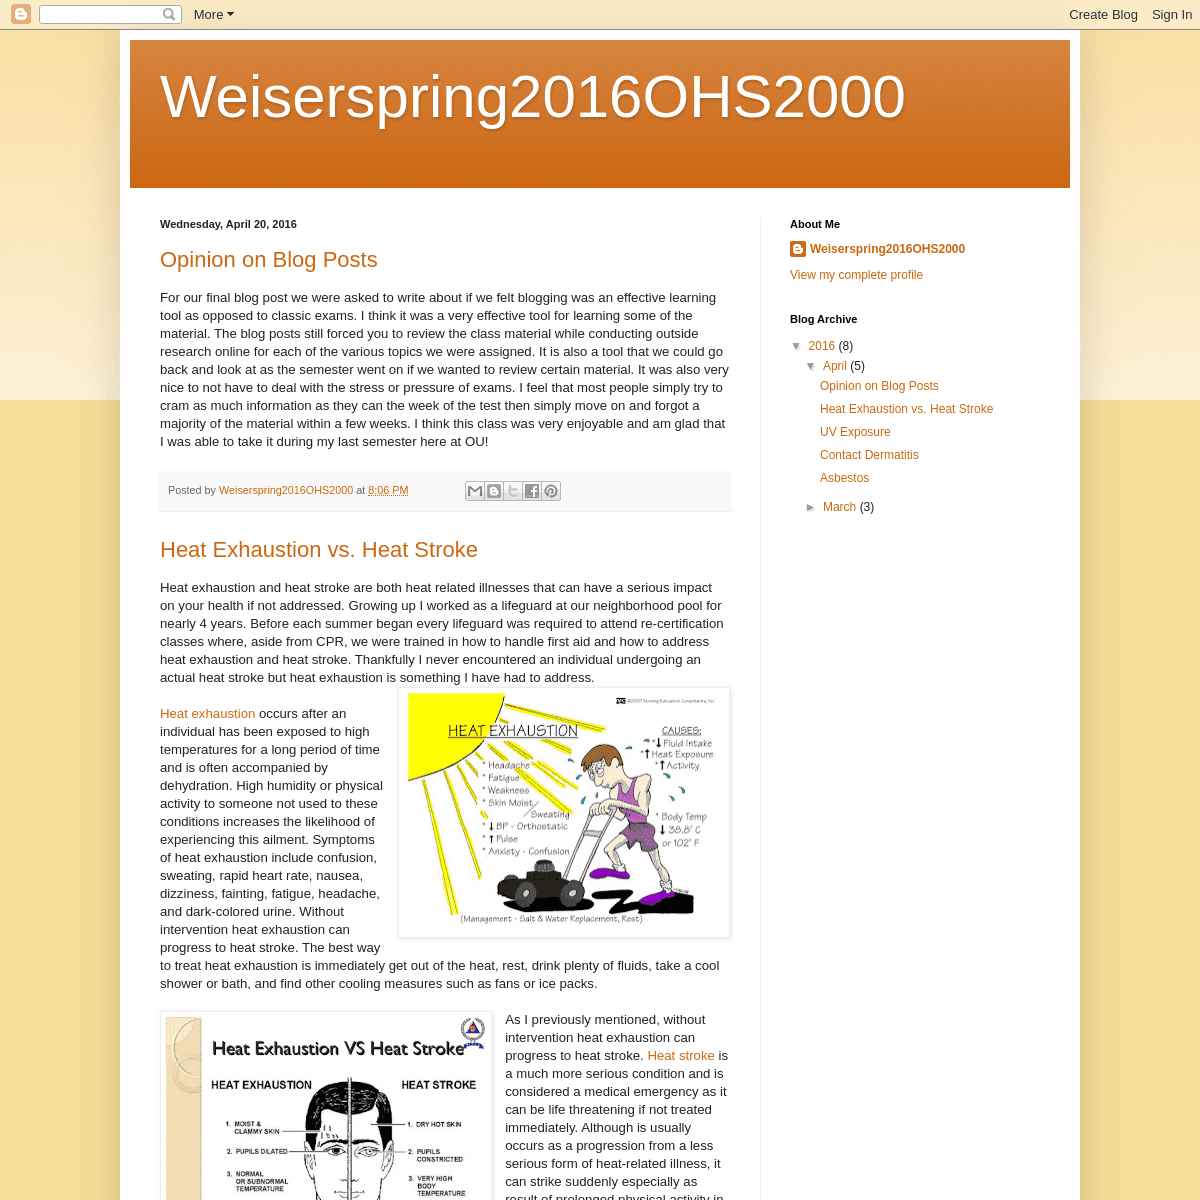 A complete backup of weiserspring2016ohs2000.blogspot.com